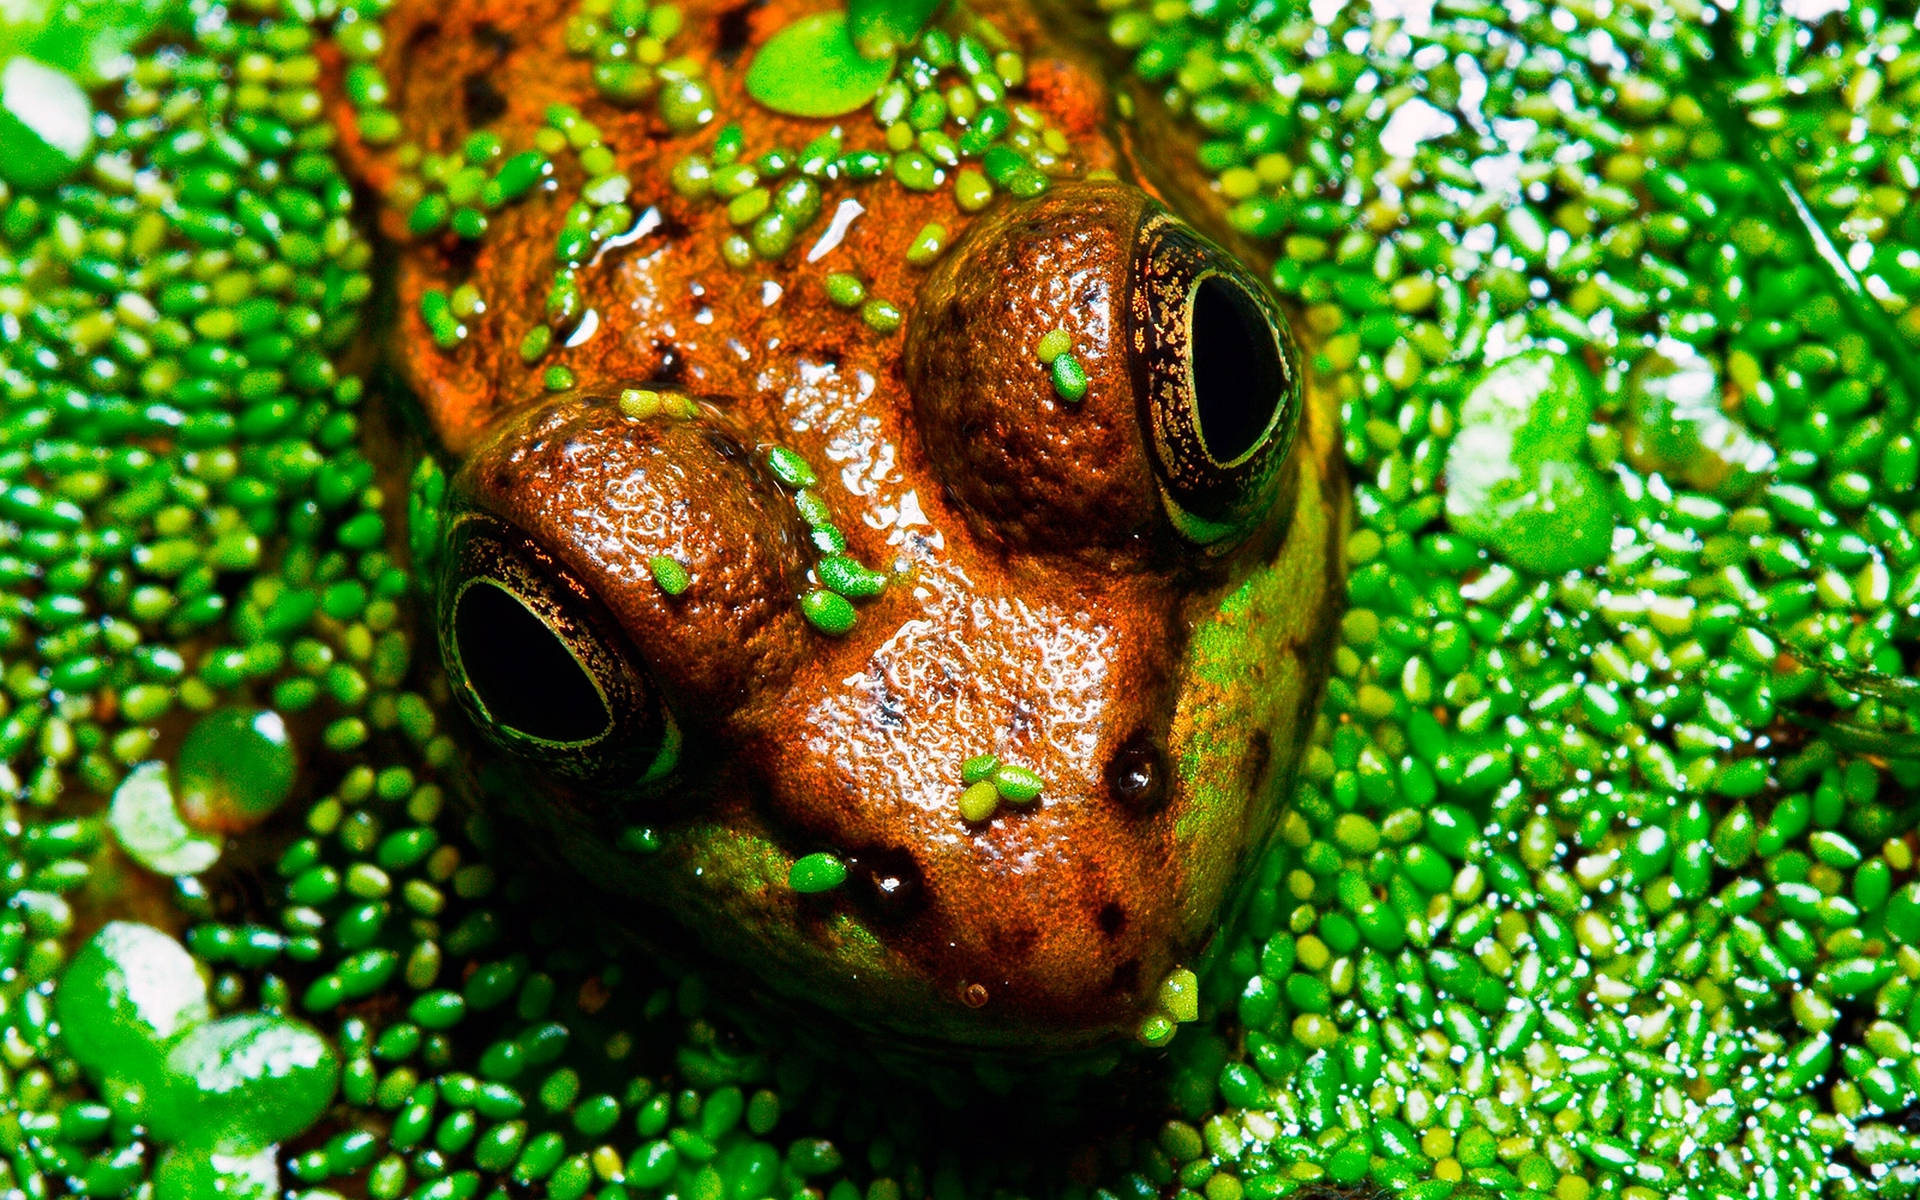 Cute Frog And Duckweed Plants